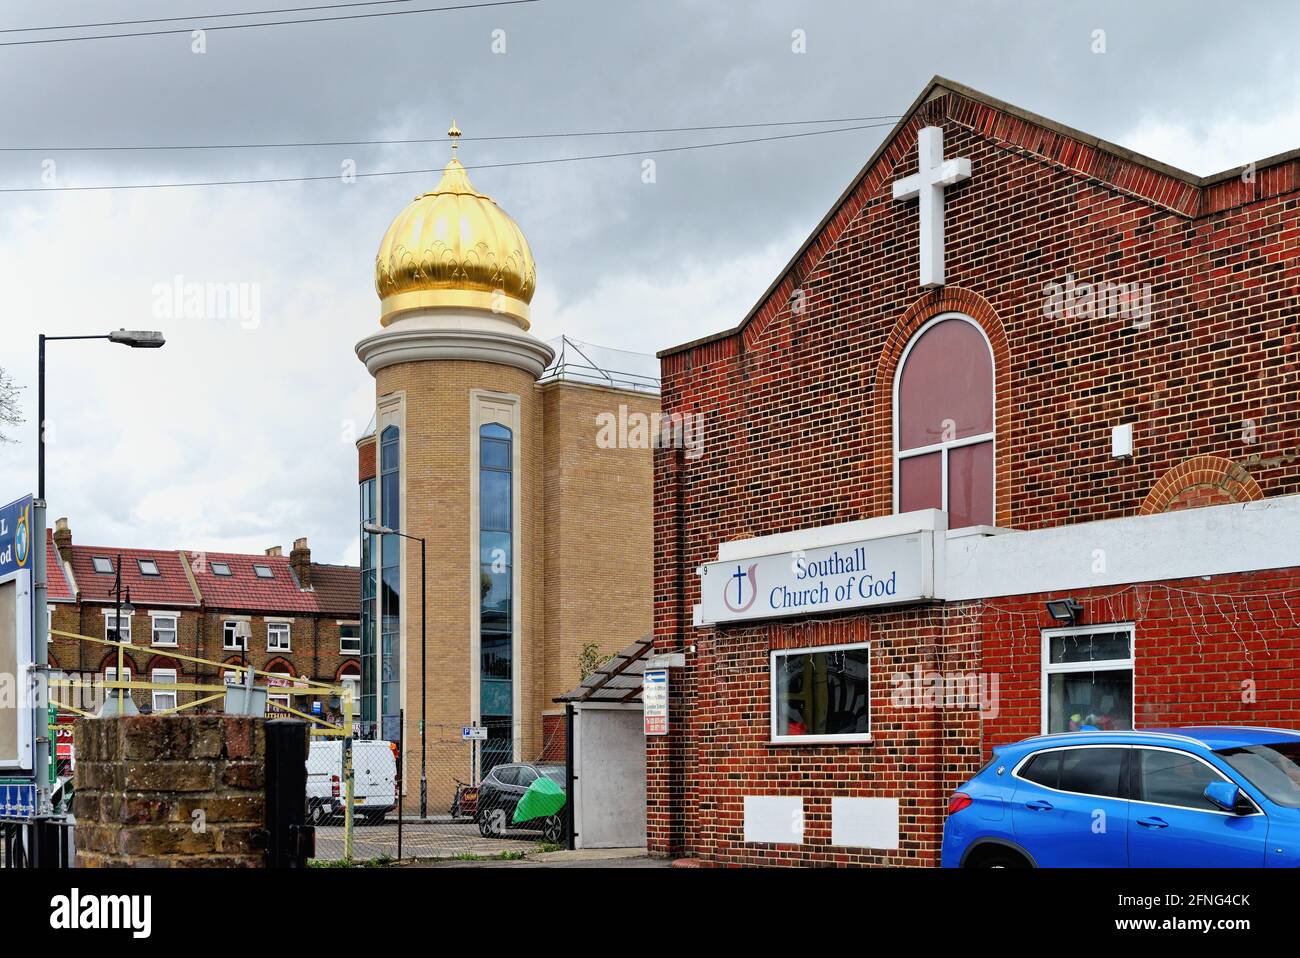 La cúpula dorada del templo sij Gurdana Guru Nanak Darber en Kings Road Southall London Borough of Ealing England REINO UNIDO Foto de stock